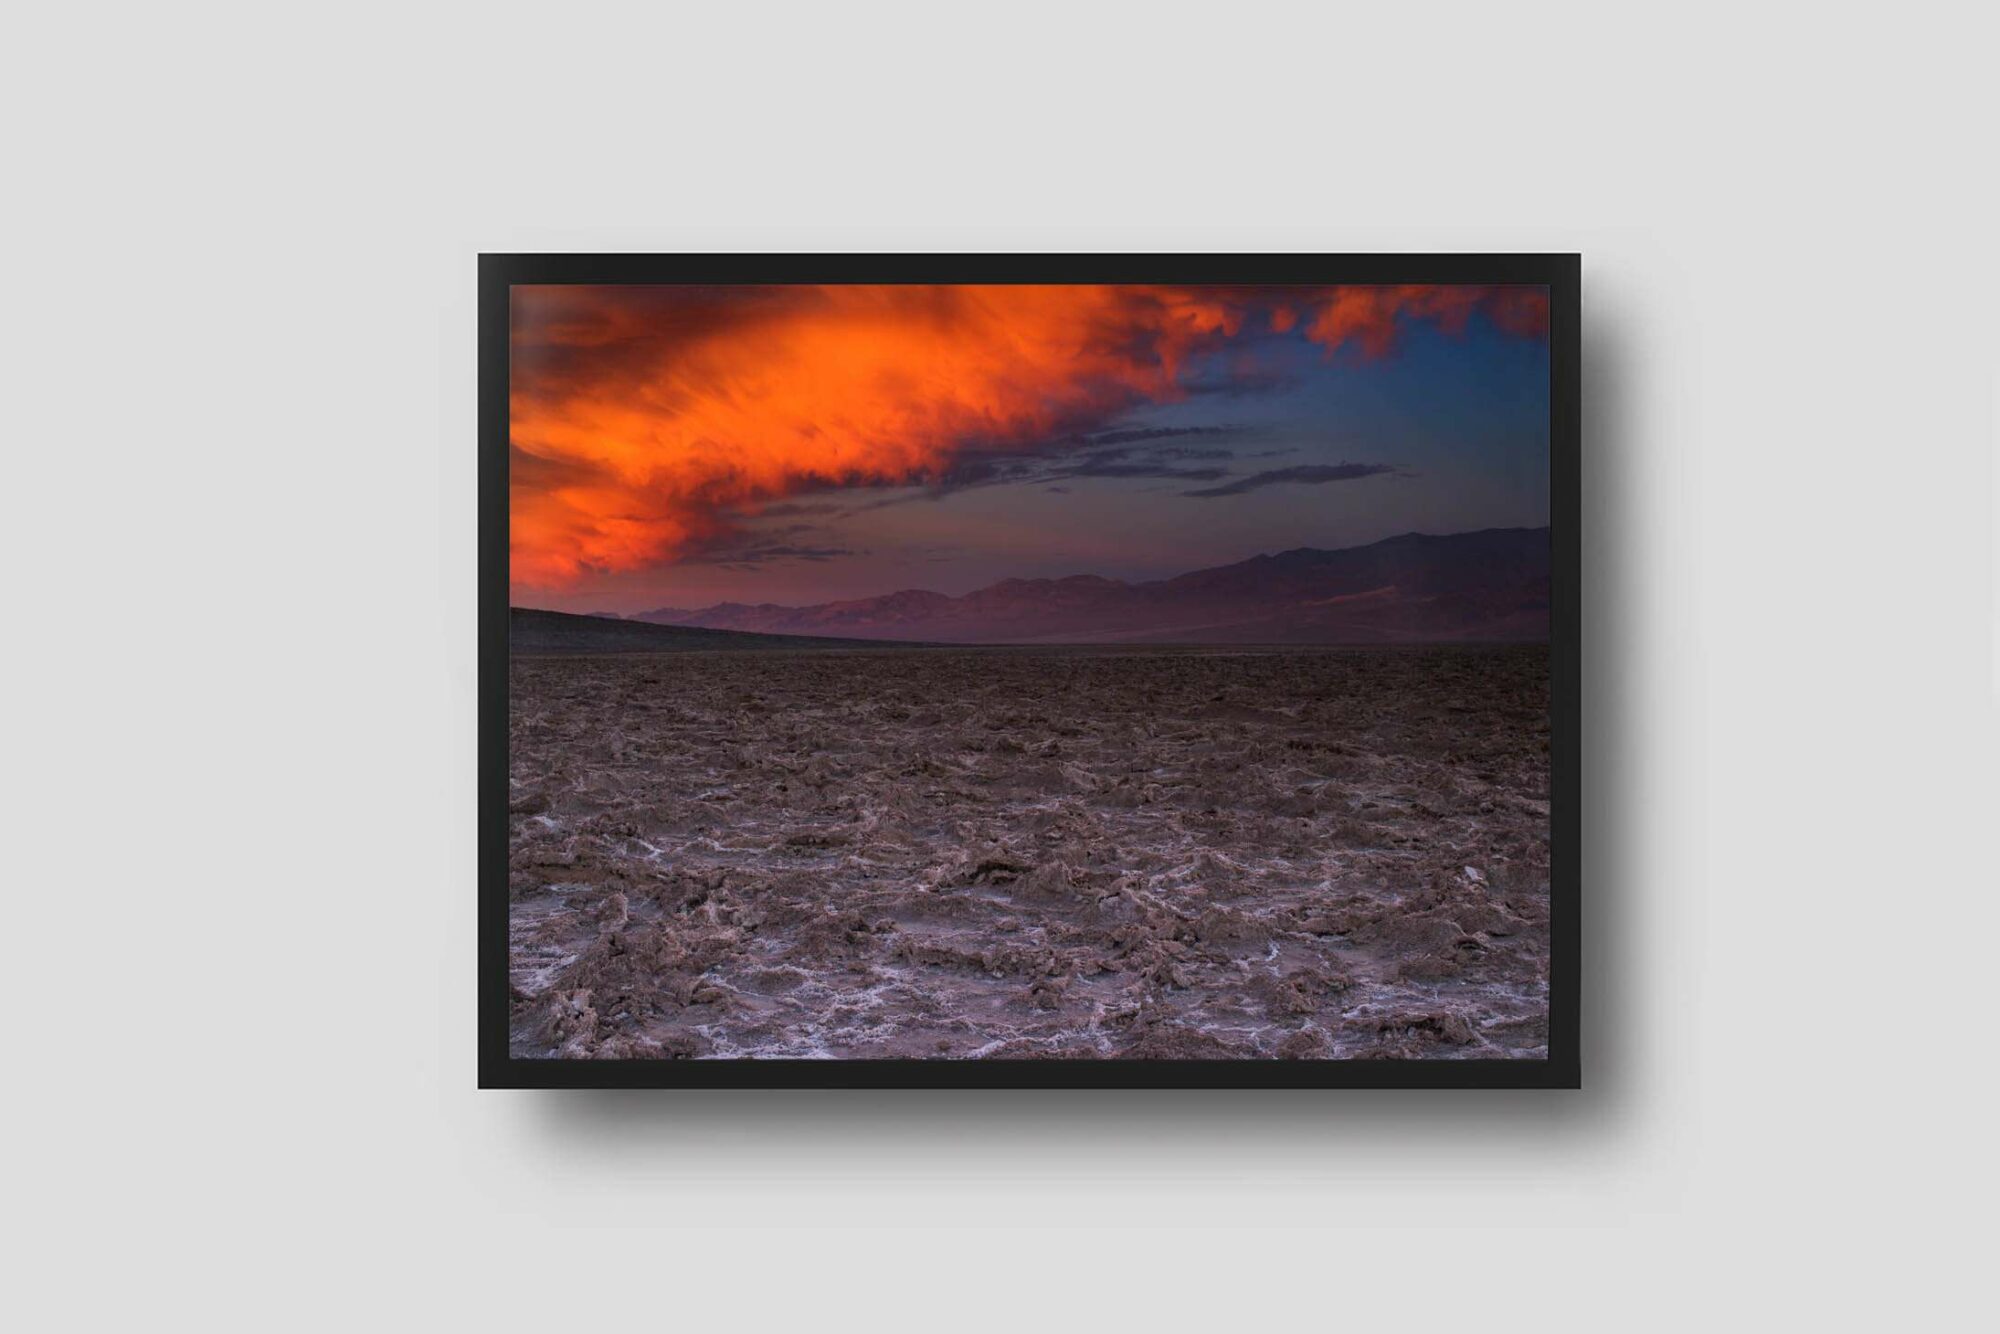 Death-valley-national-park-framed-photography